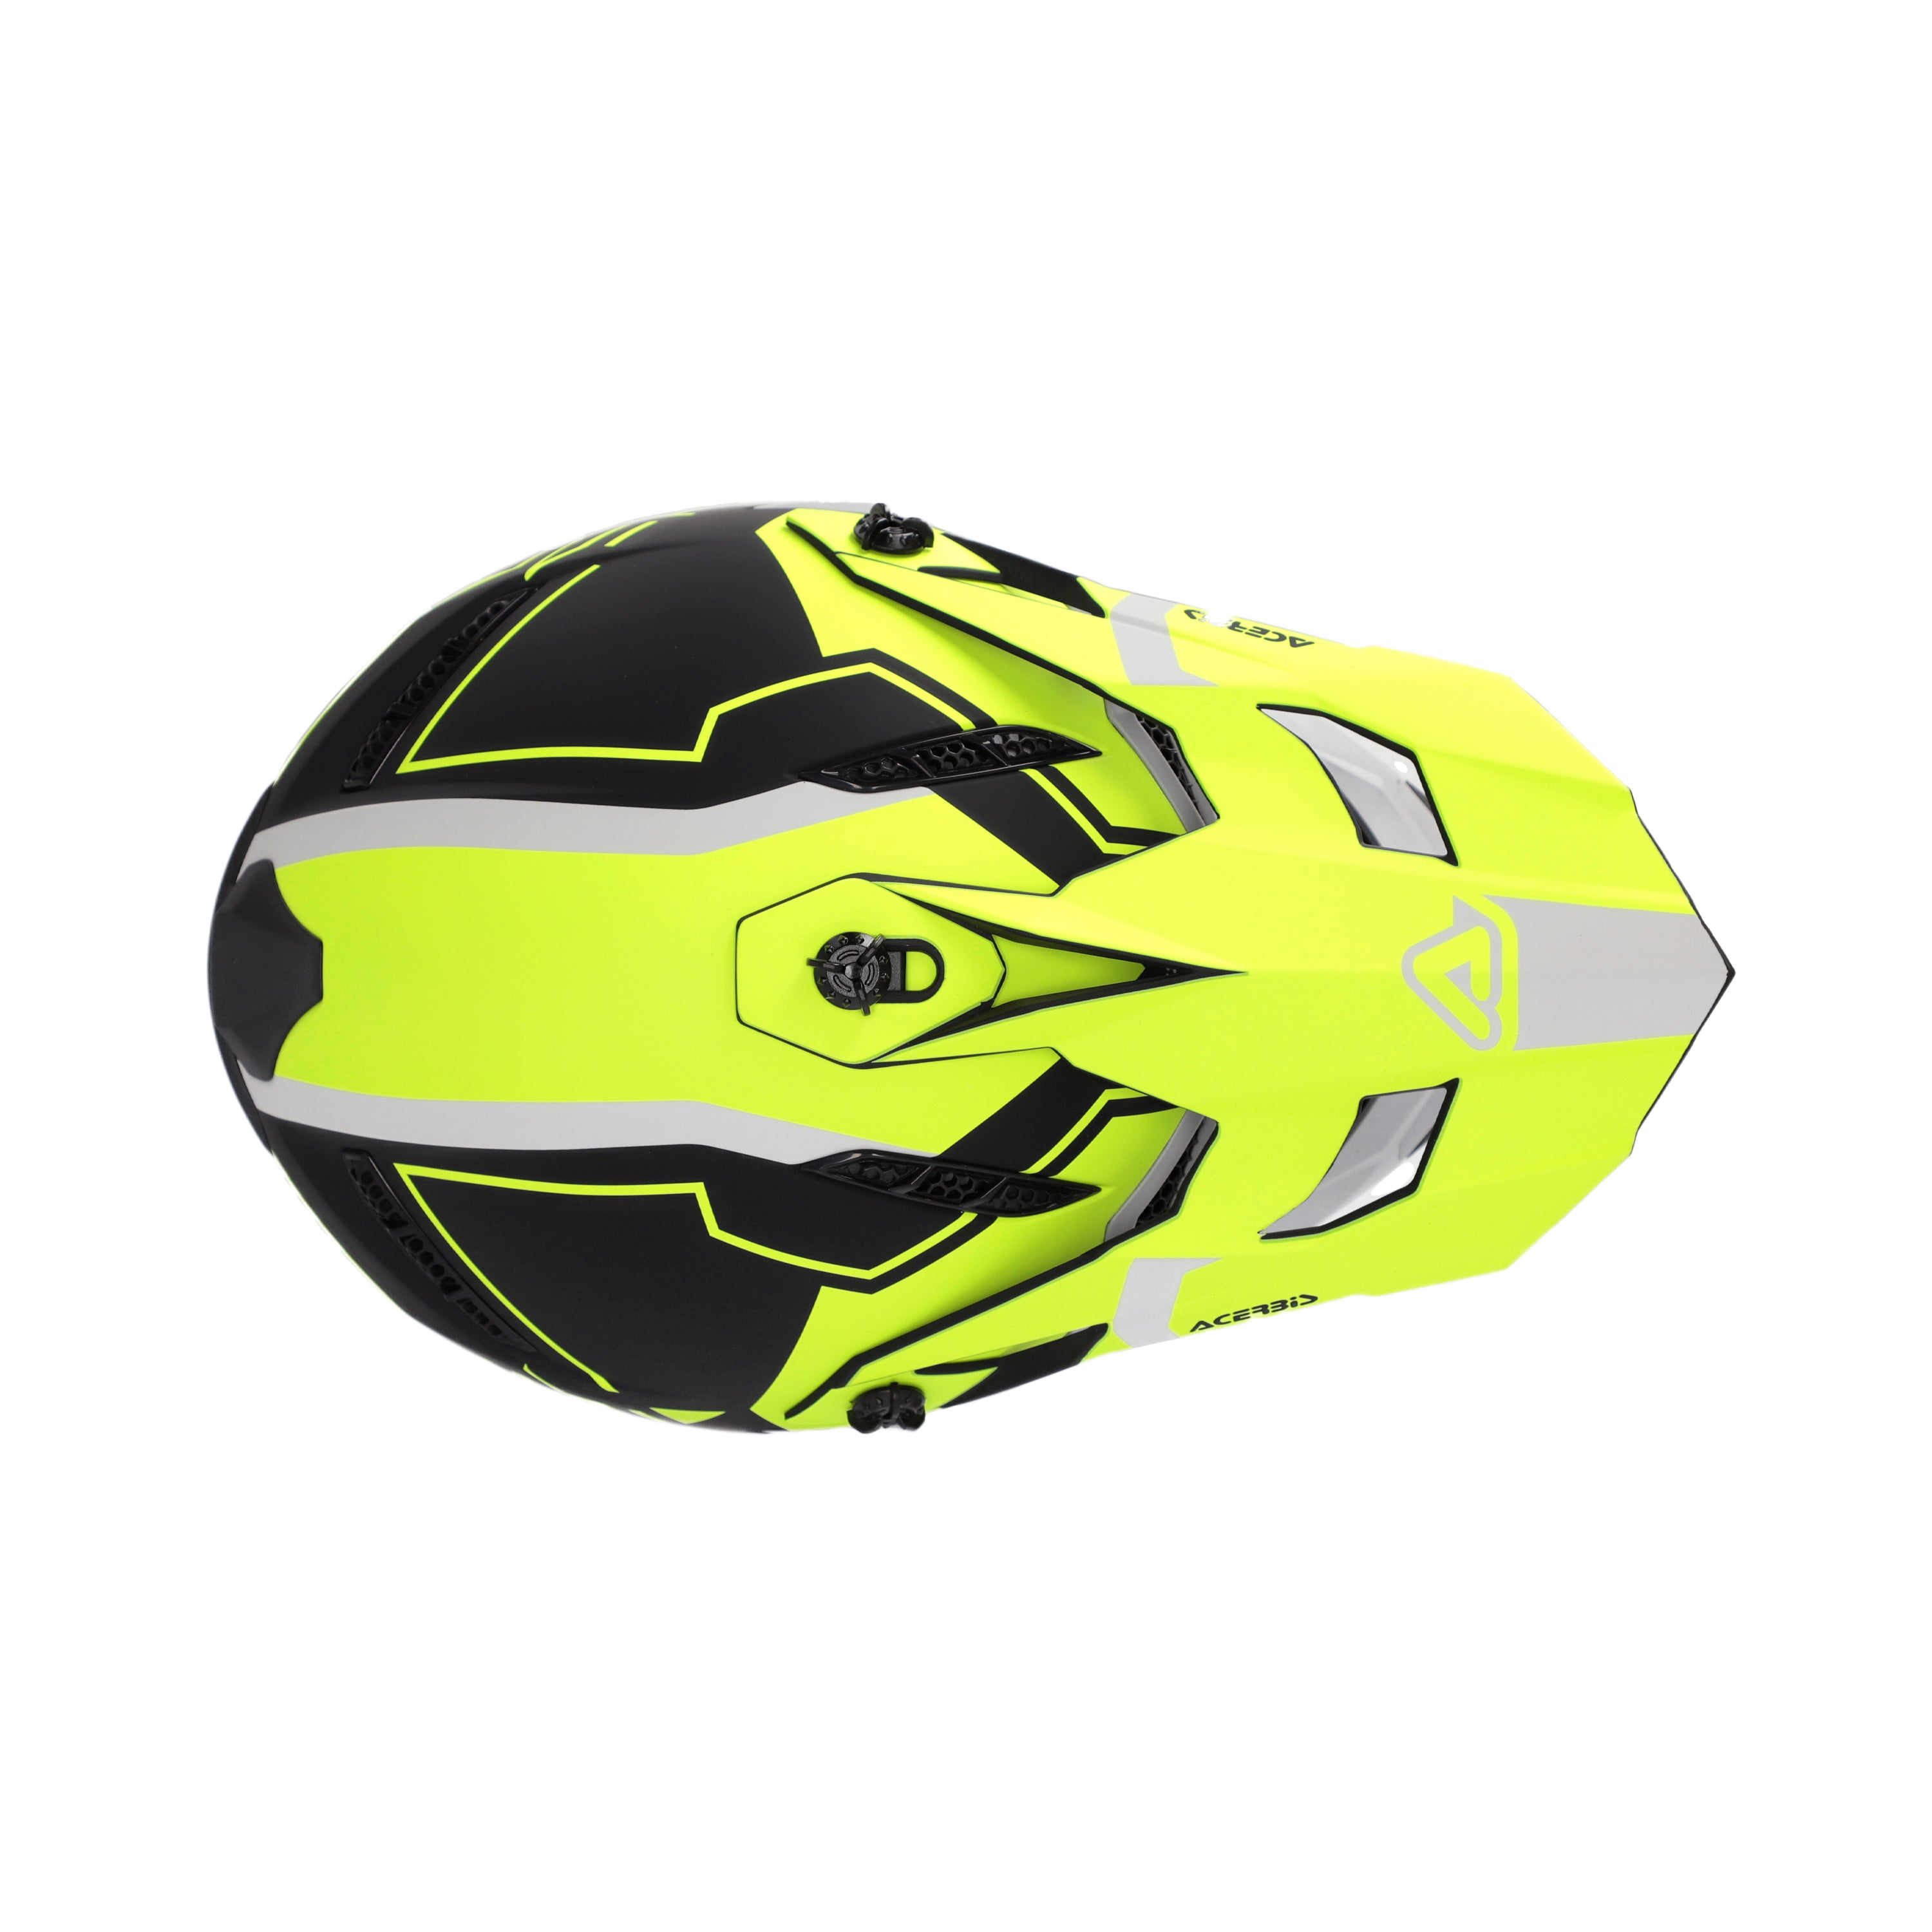 Acerbis Profile 5 MX Helmet Matte Black/Fluo Yellow